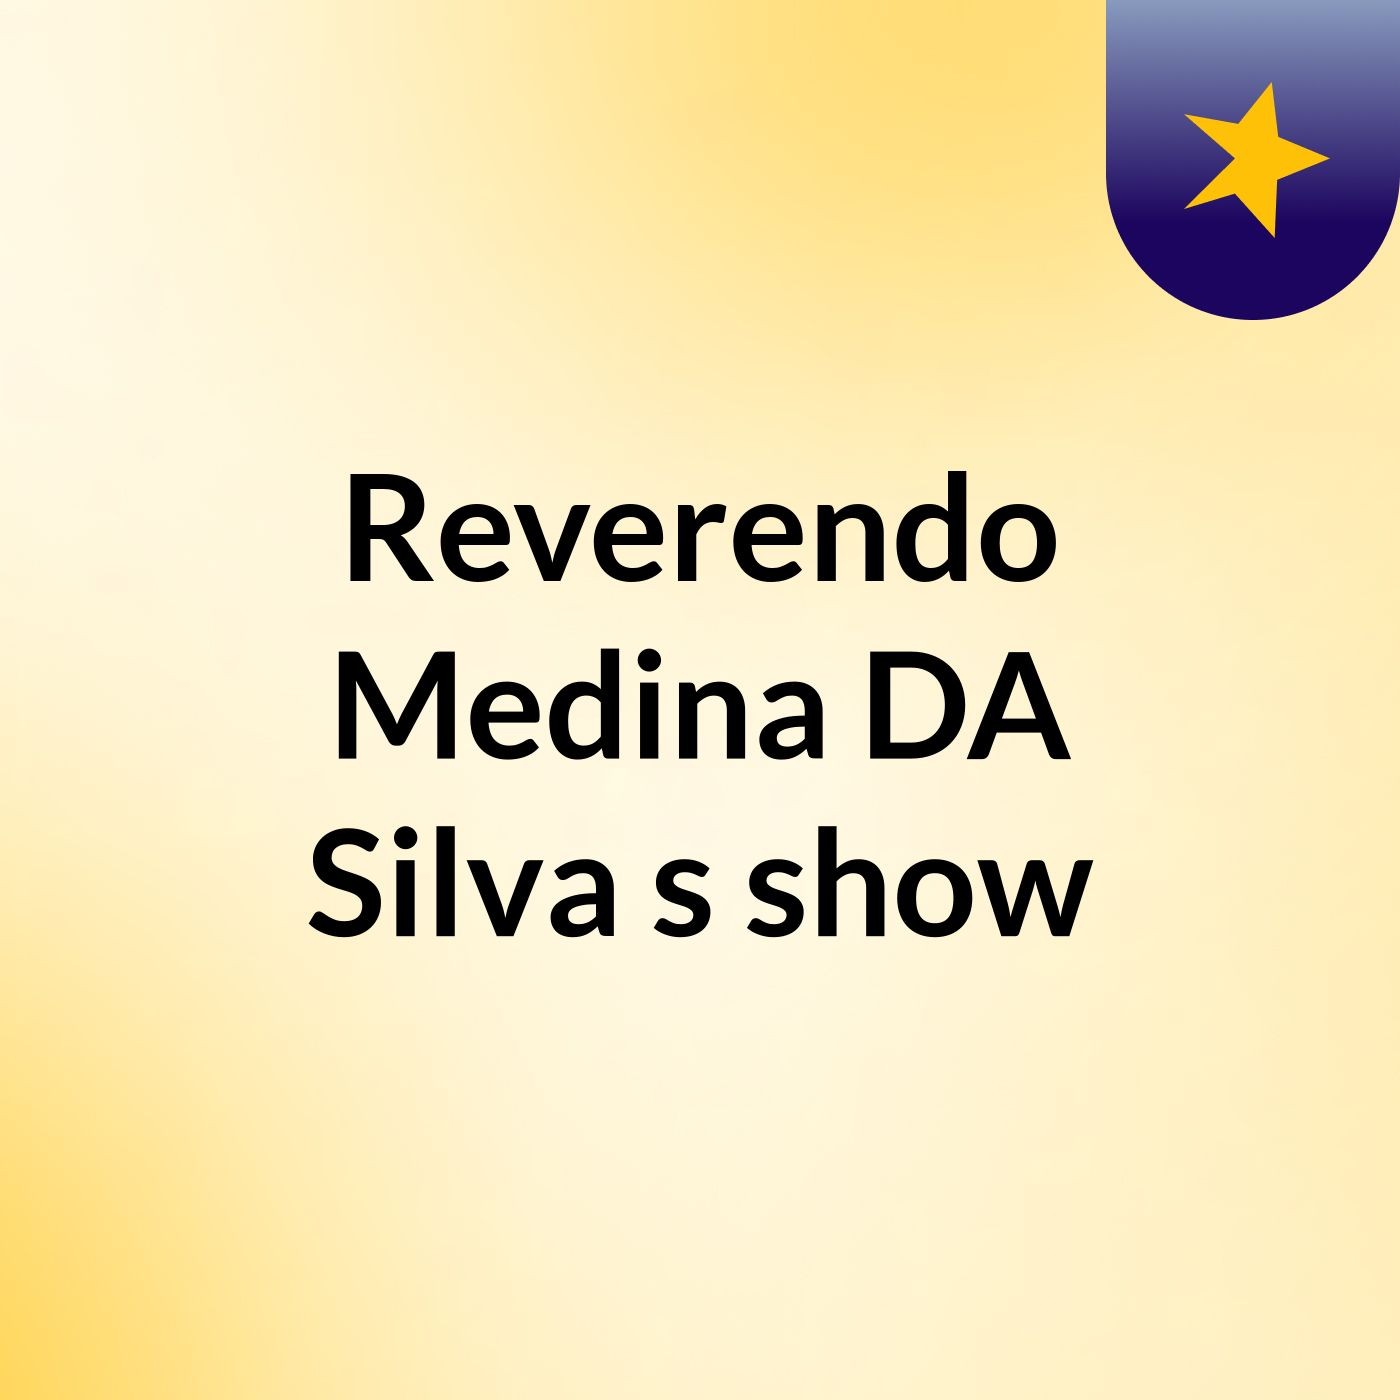 Reverendo Medina DA Silva's show